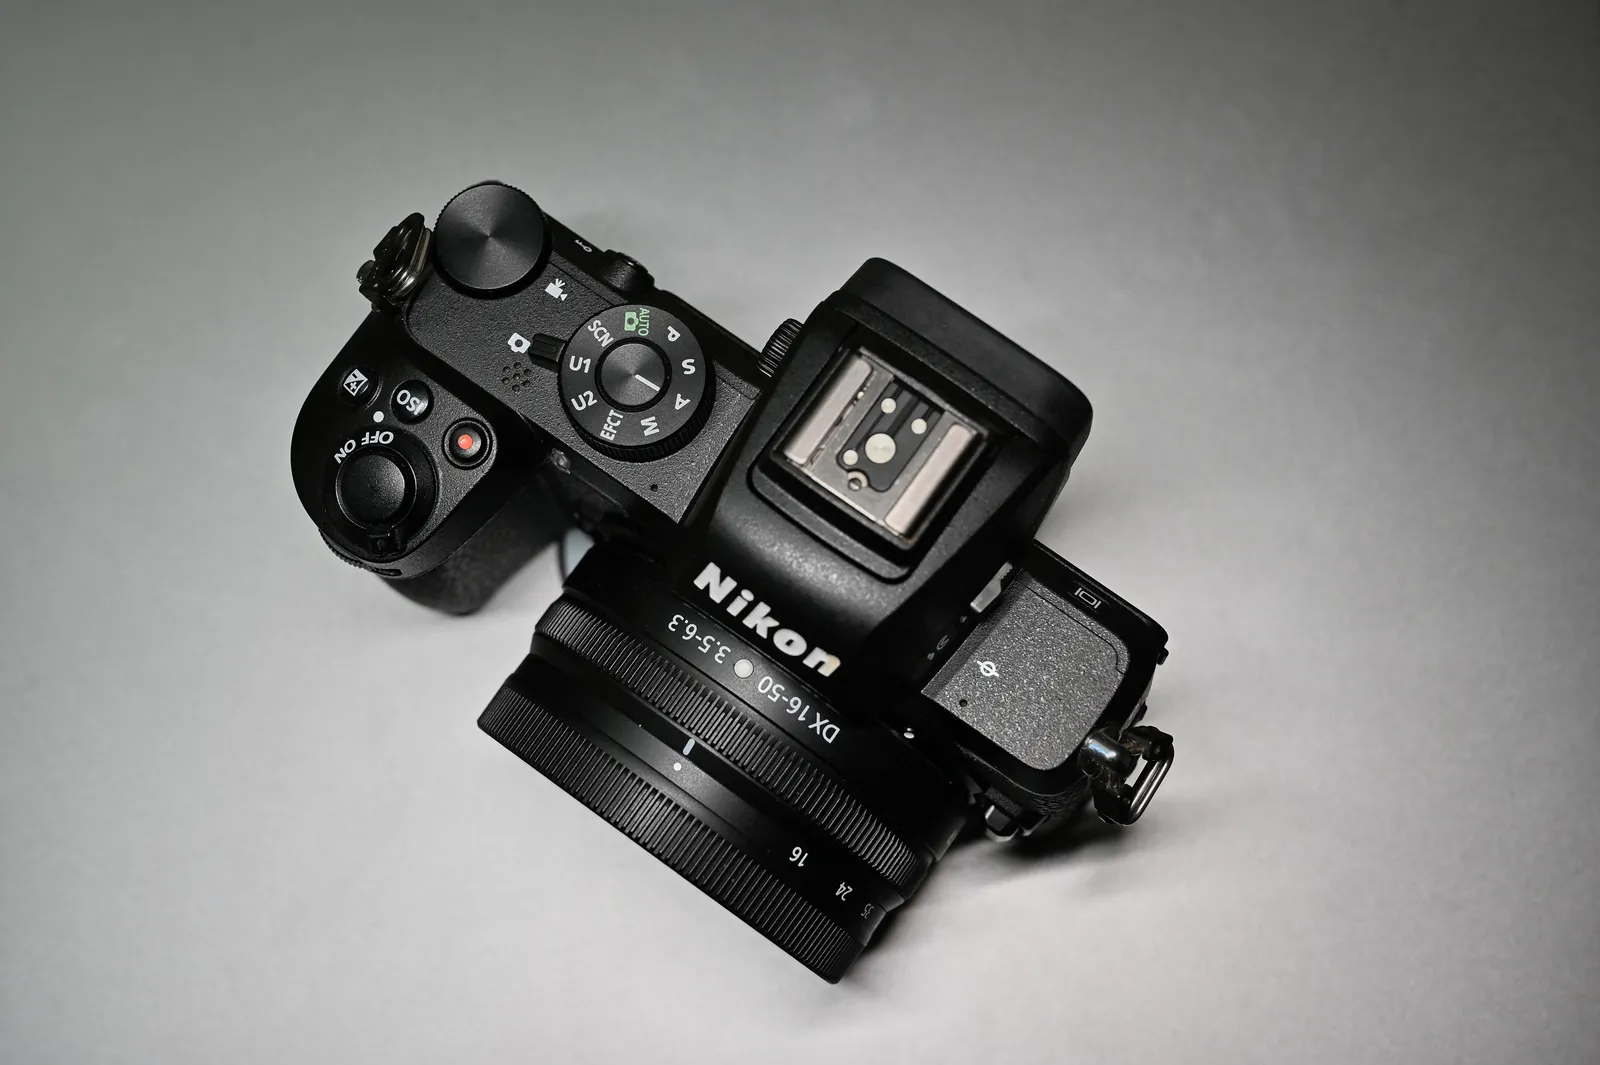 Nikon Z50 Mirrorless Camera with Accessories Kit